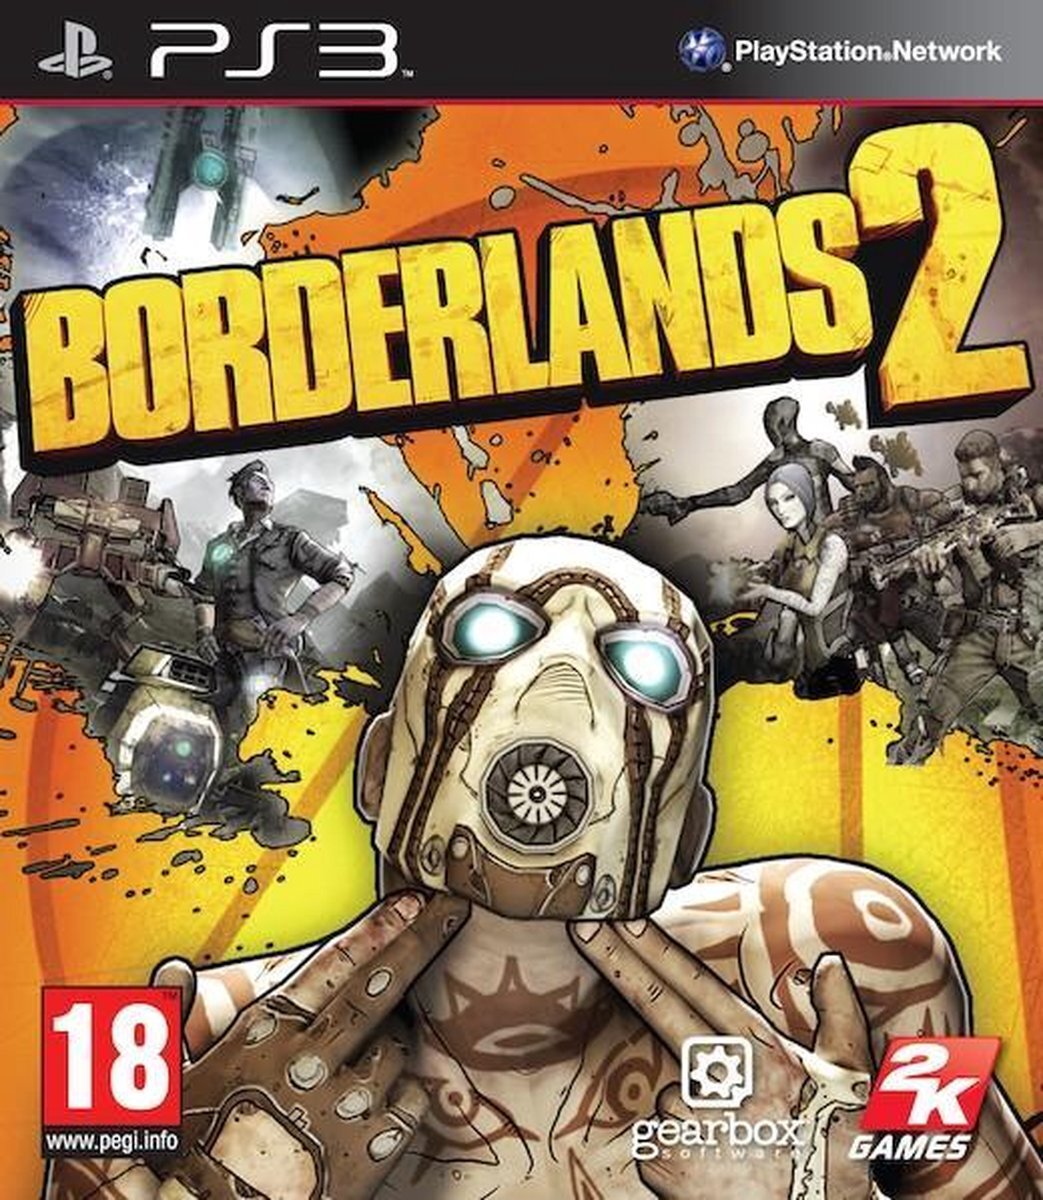 Take Two borderlands 2 PlayStation 3